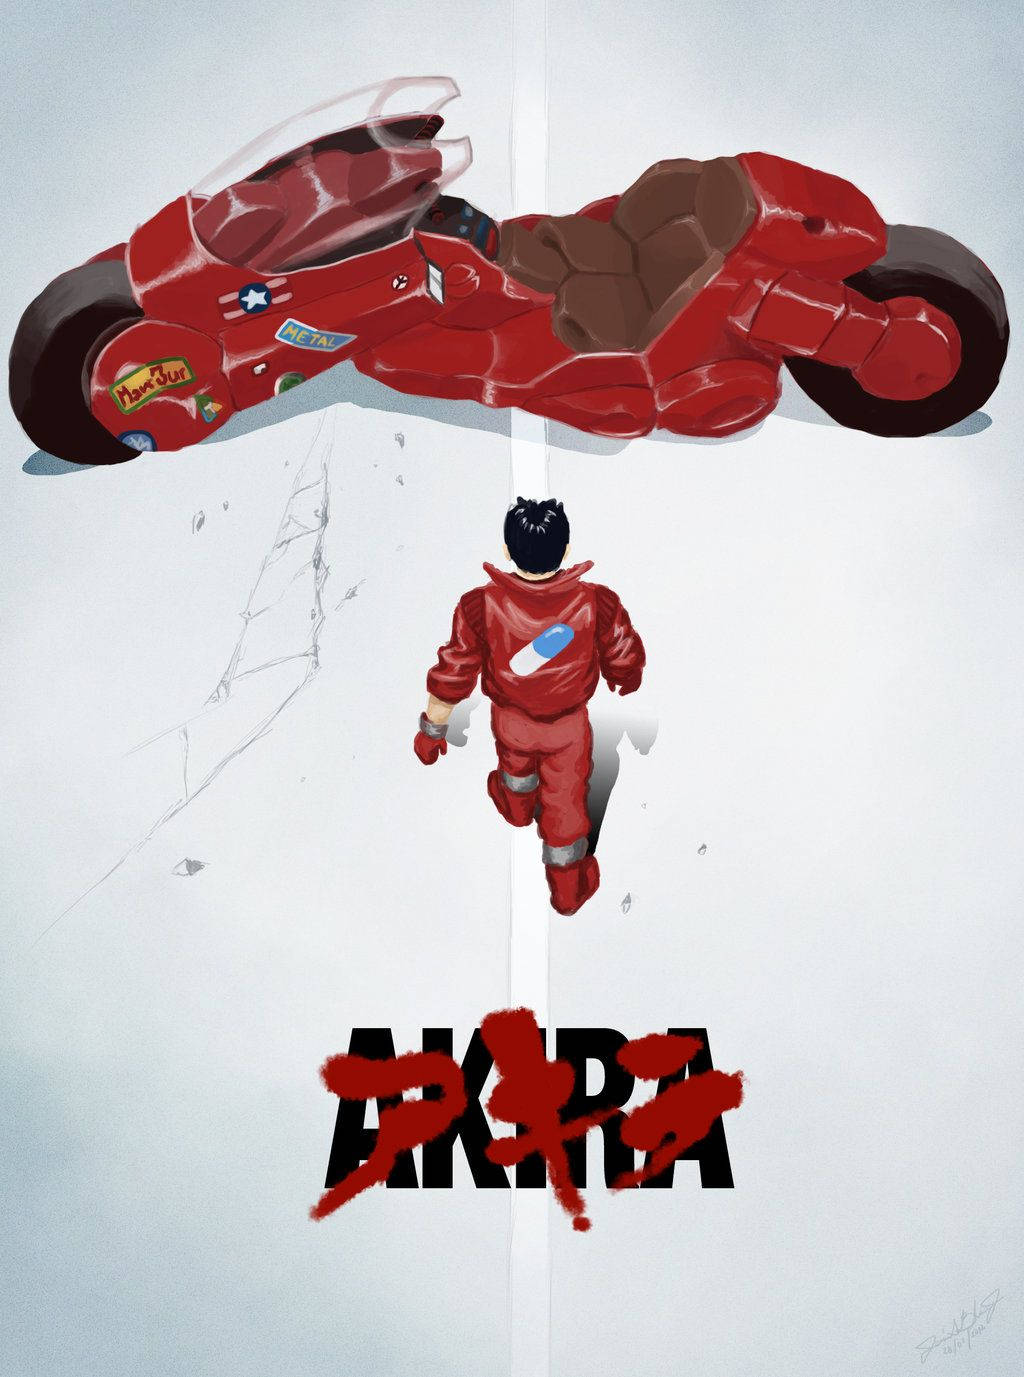 Akira's iconic motorcycle, taking him on his next adventure. Wallpaper